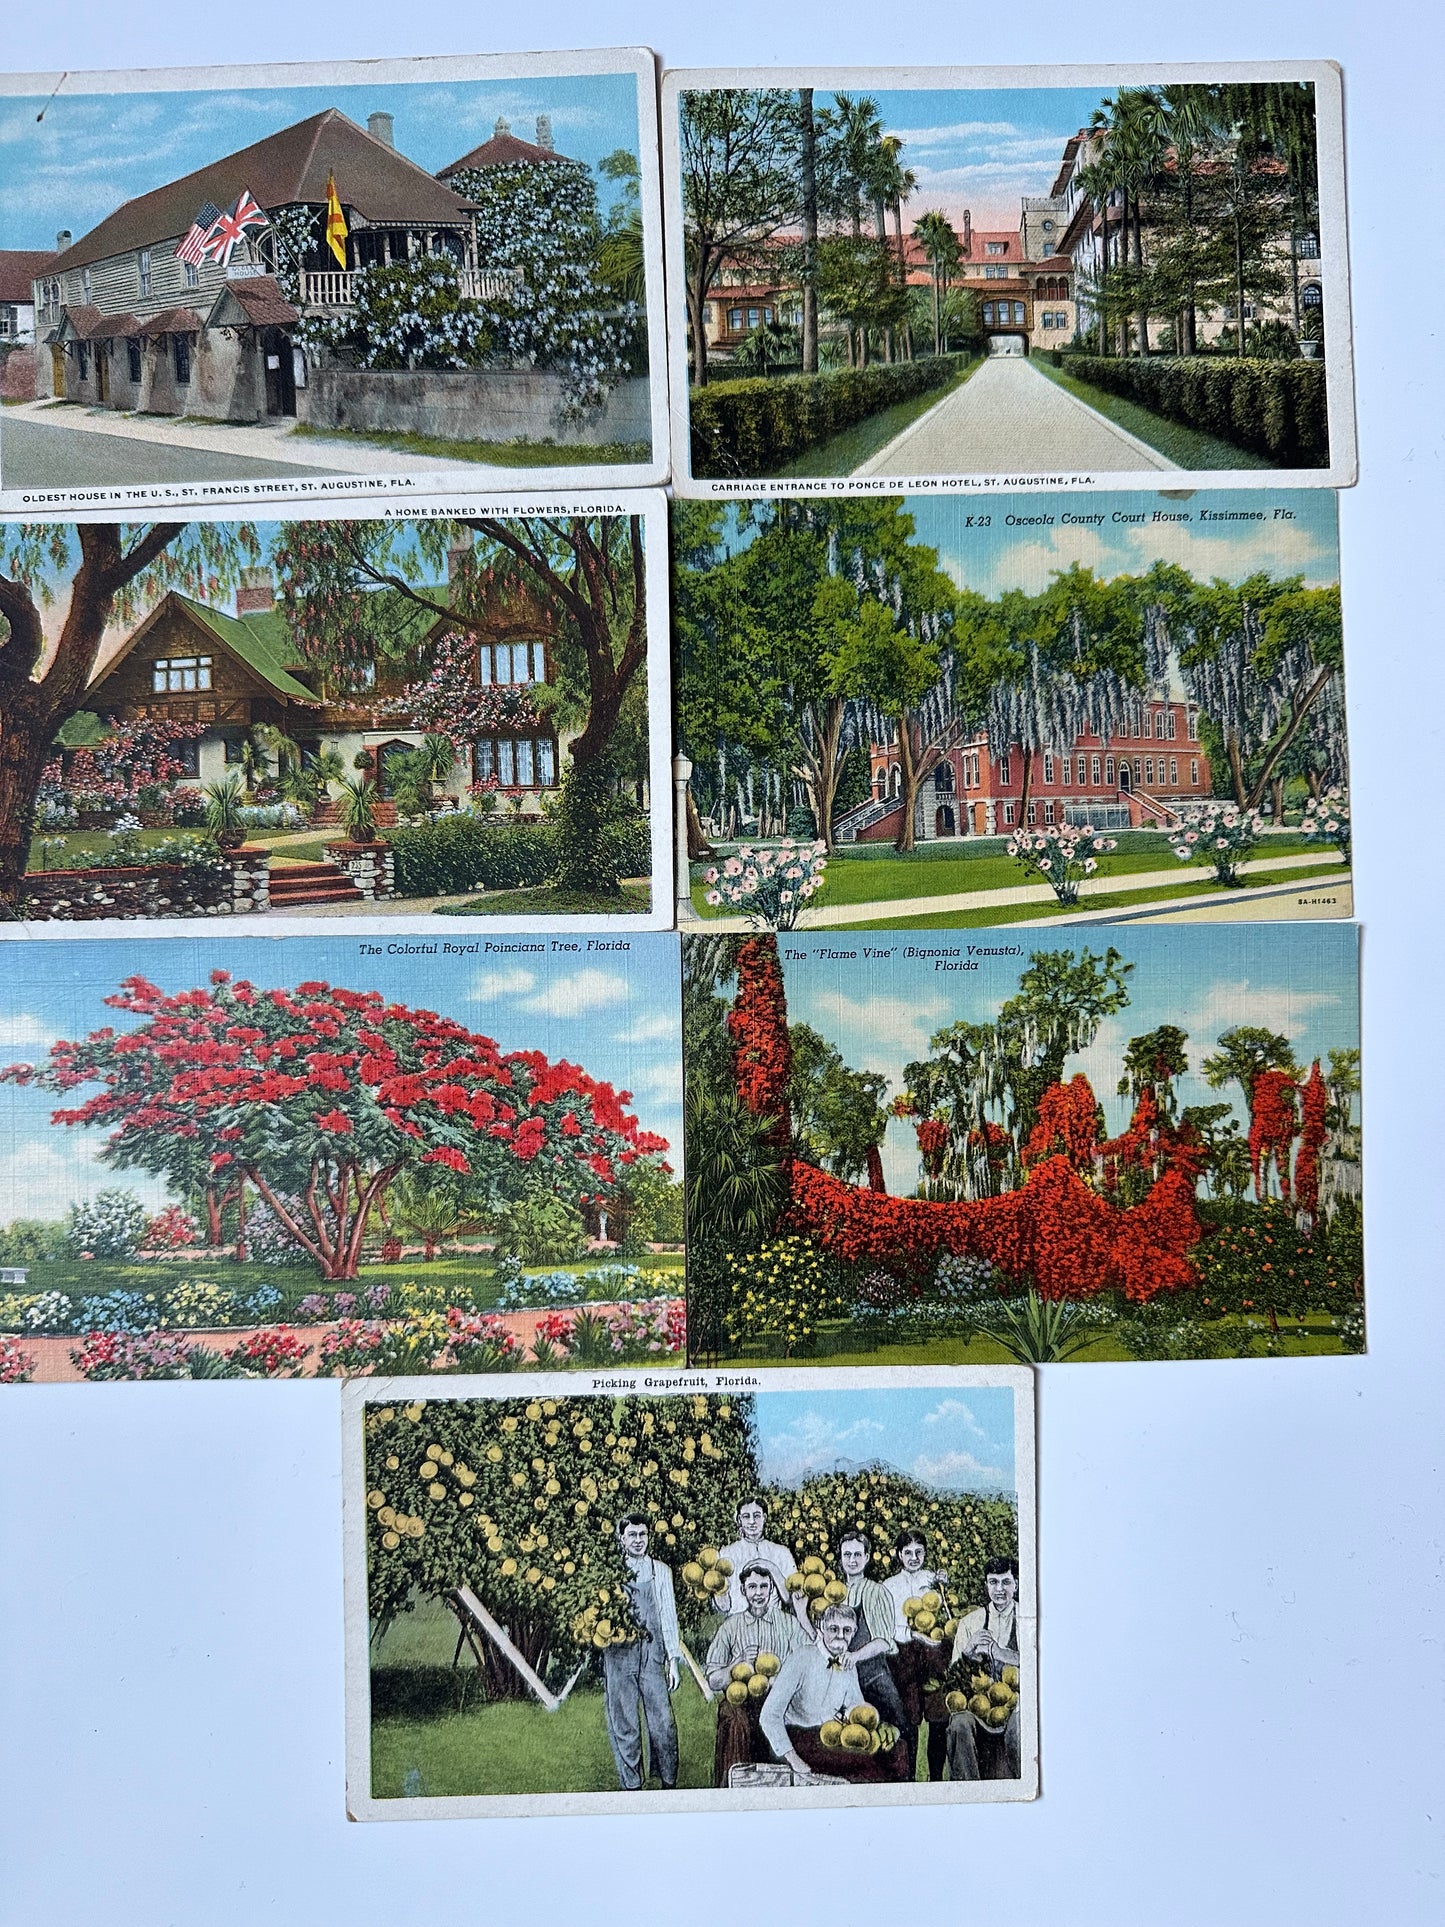 Vintage Florida postcards - flowers